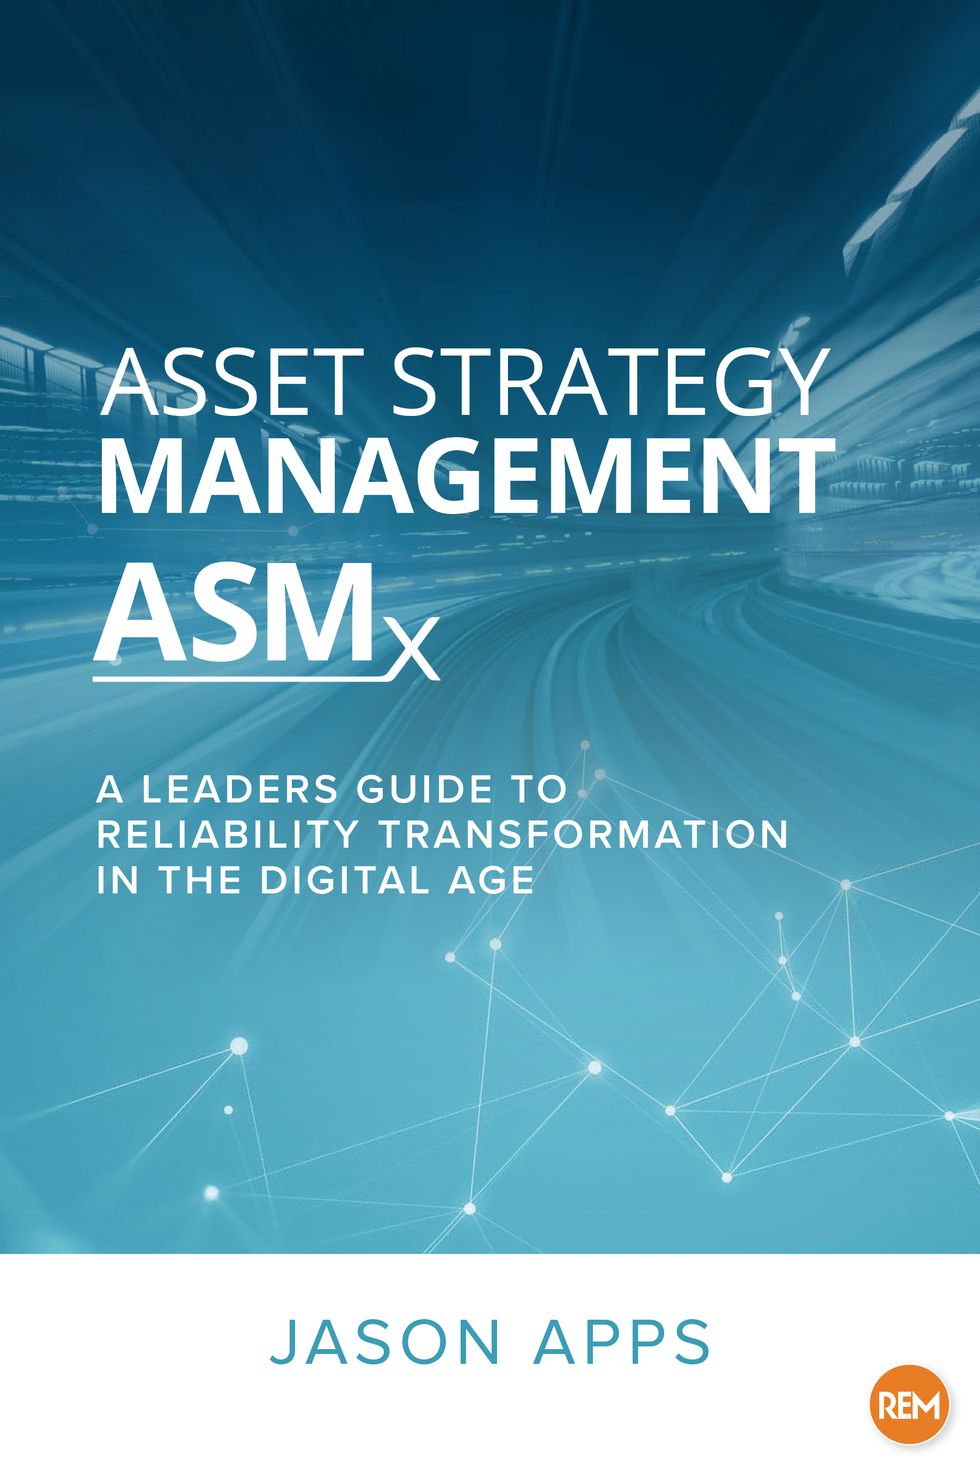  Asset Strategy Management ASMx 